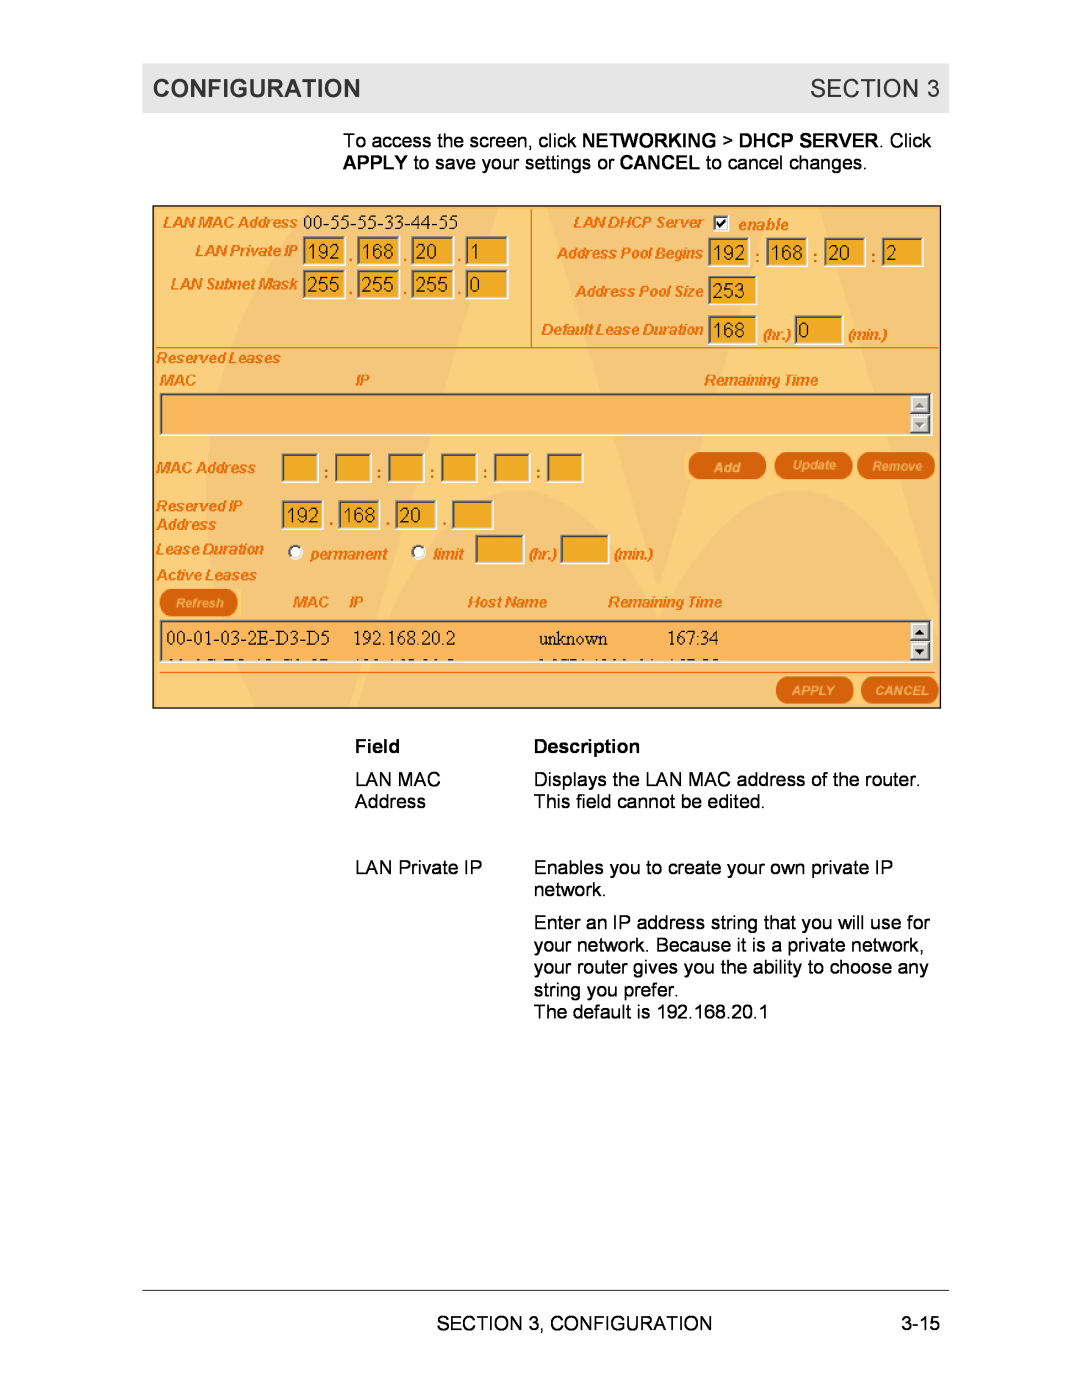 Motorola BR700 manual Configuration, Section, Field, Description 